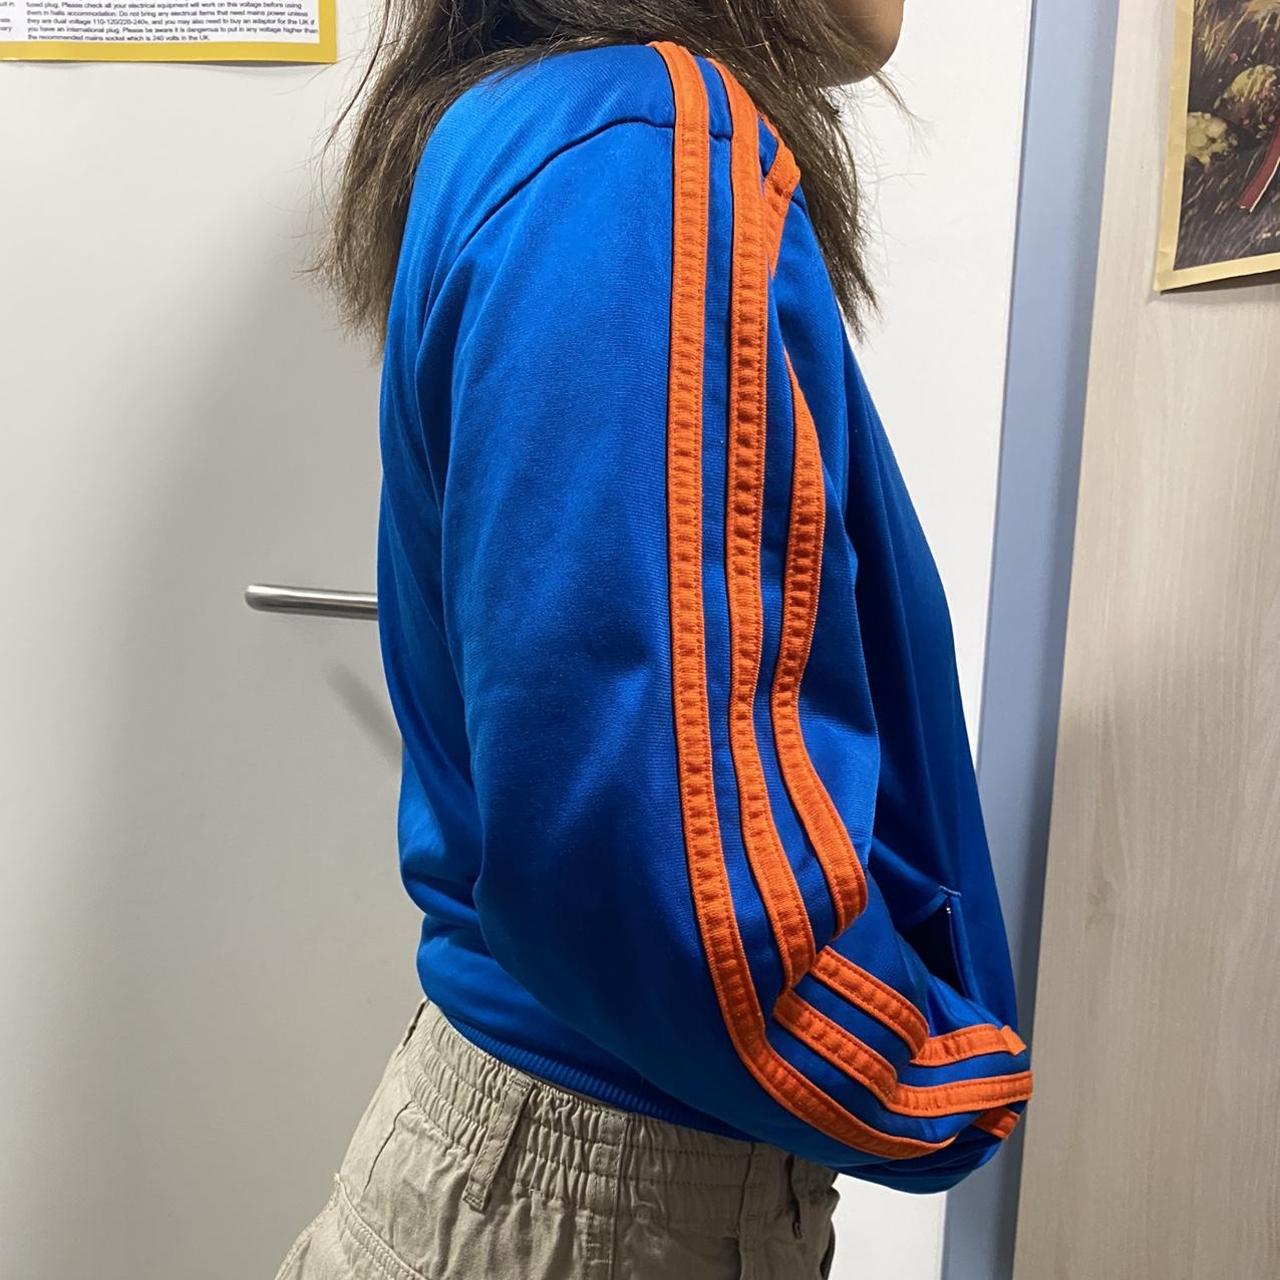 Adidas Women's Blue and Orange Coat | Depop